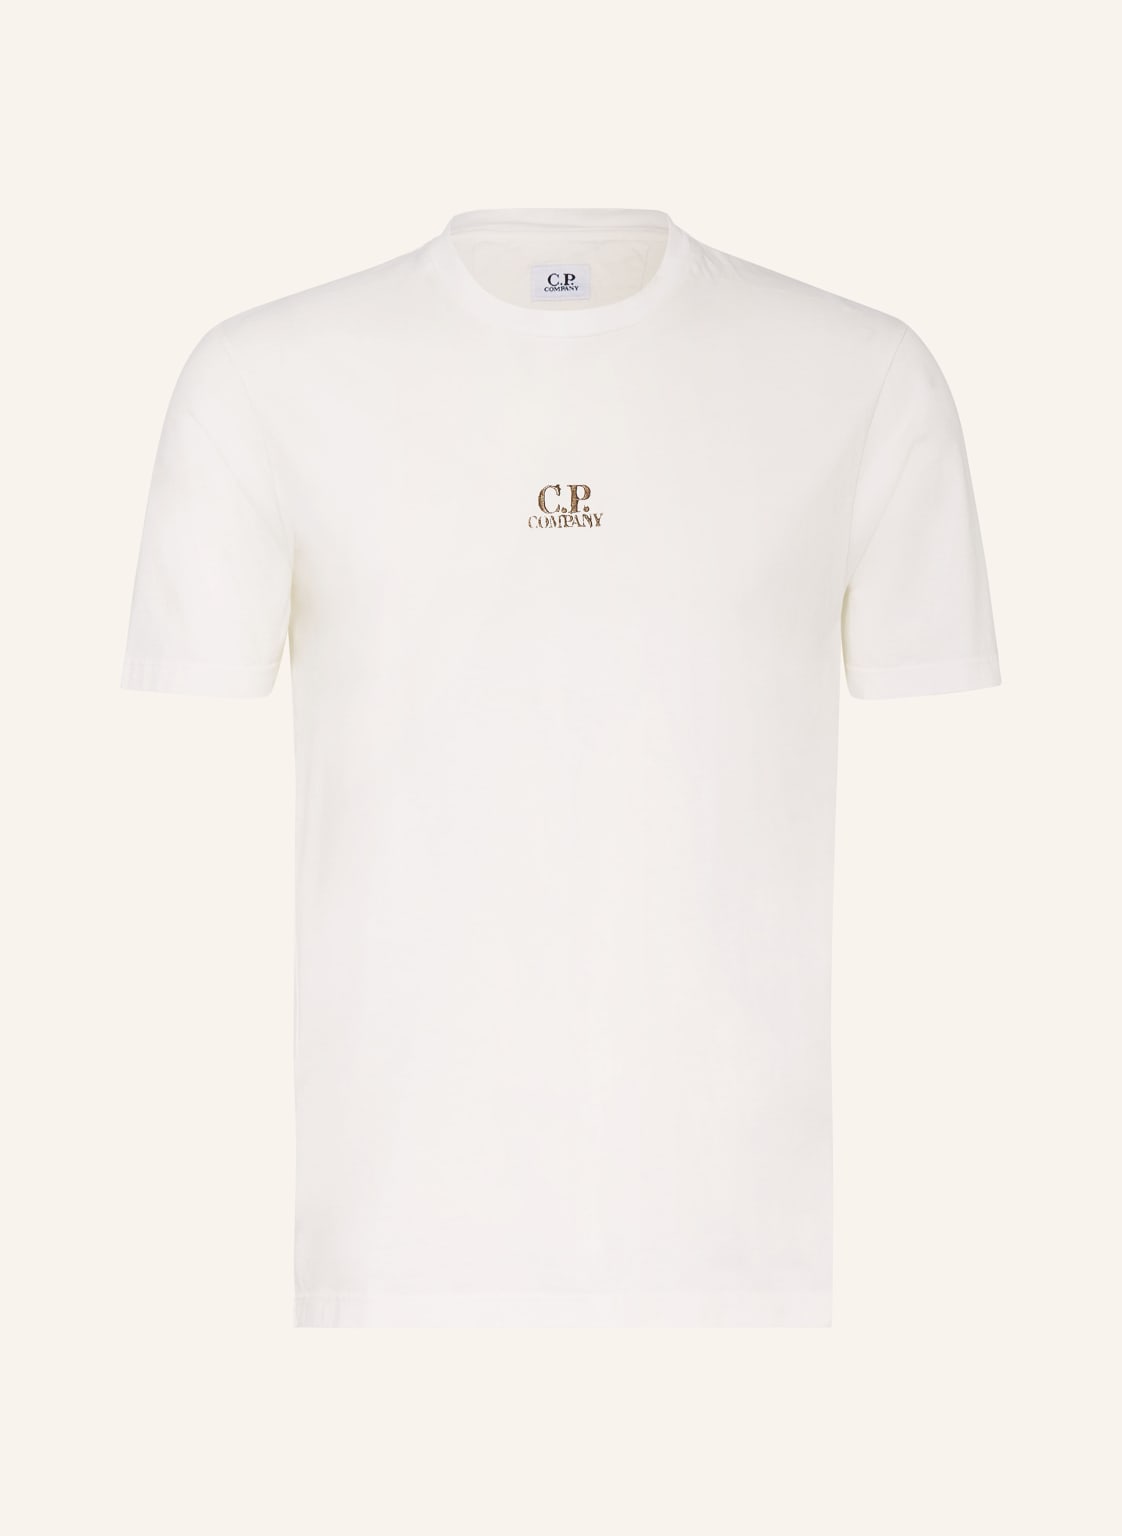 C.P. Company T-Shirt weiss von C.P. Company